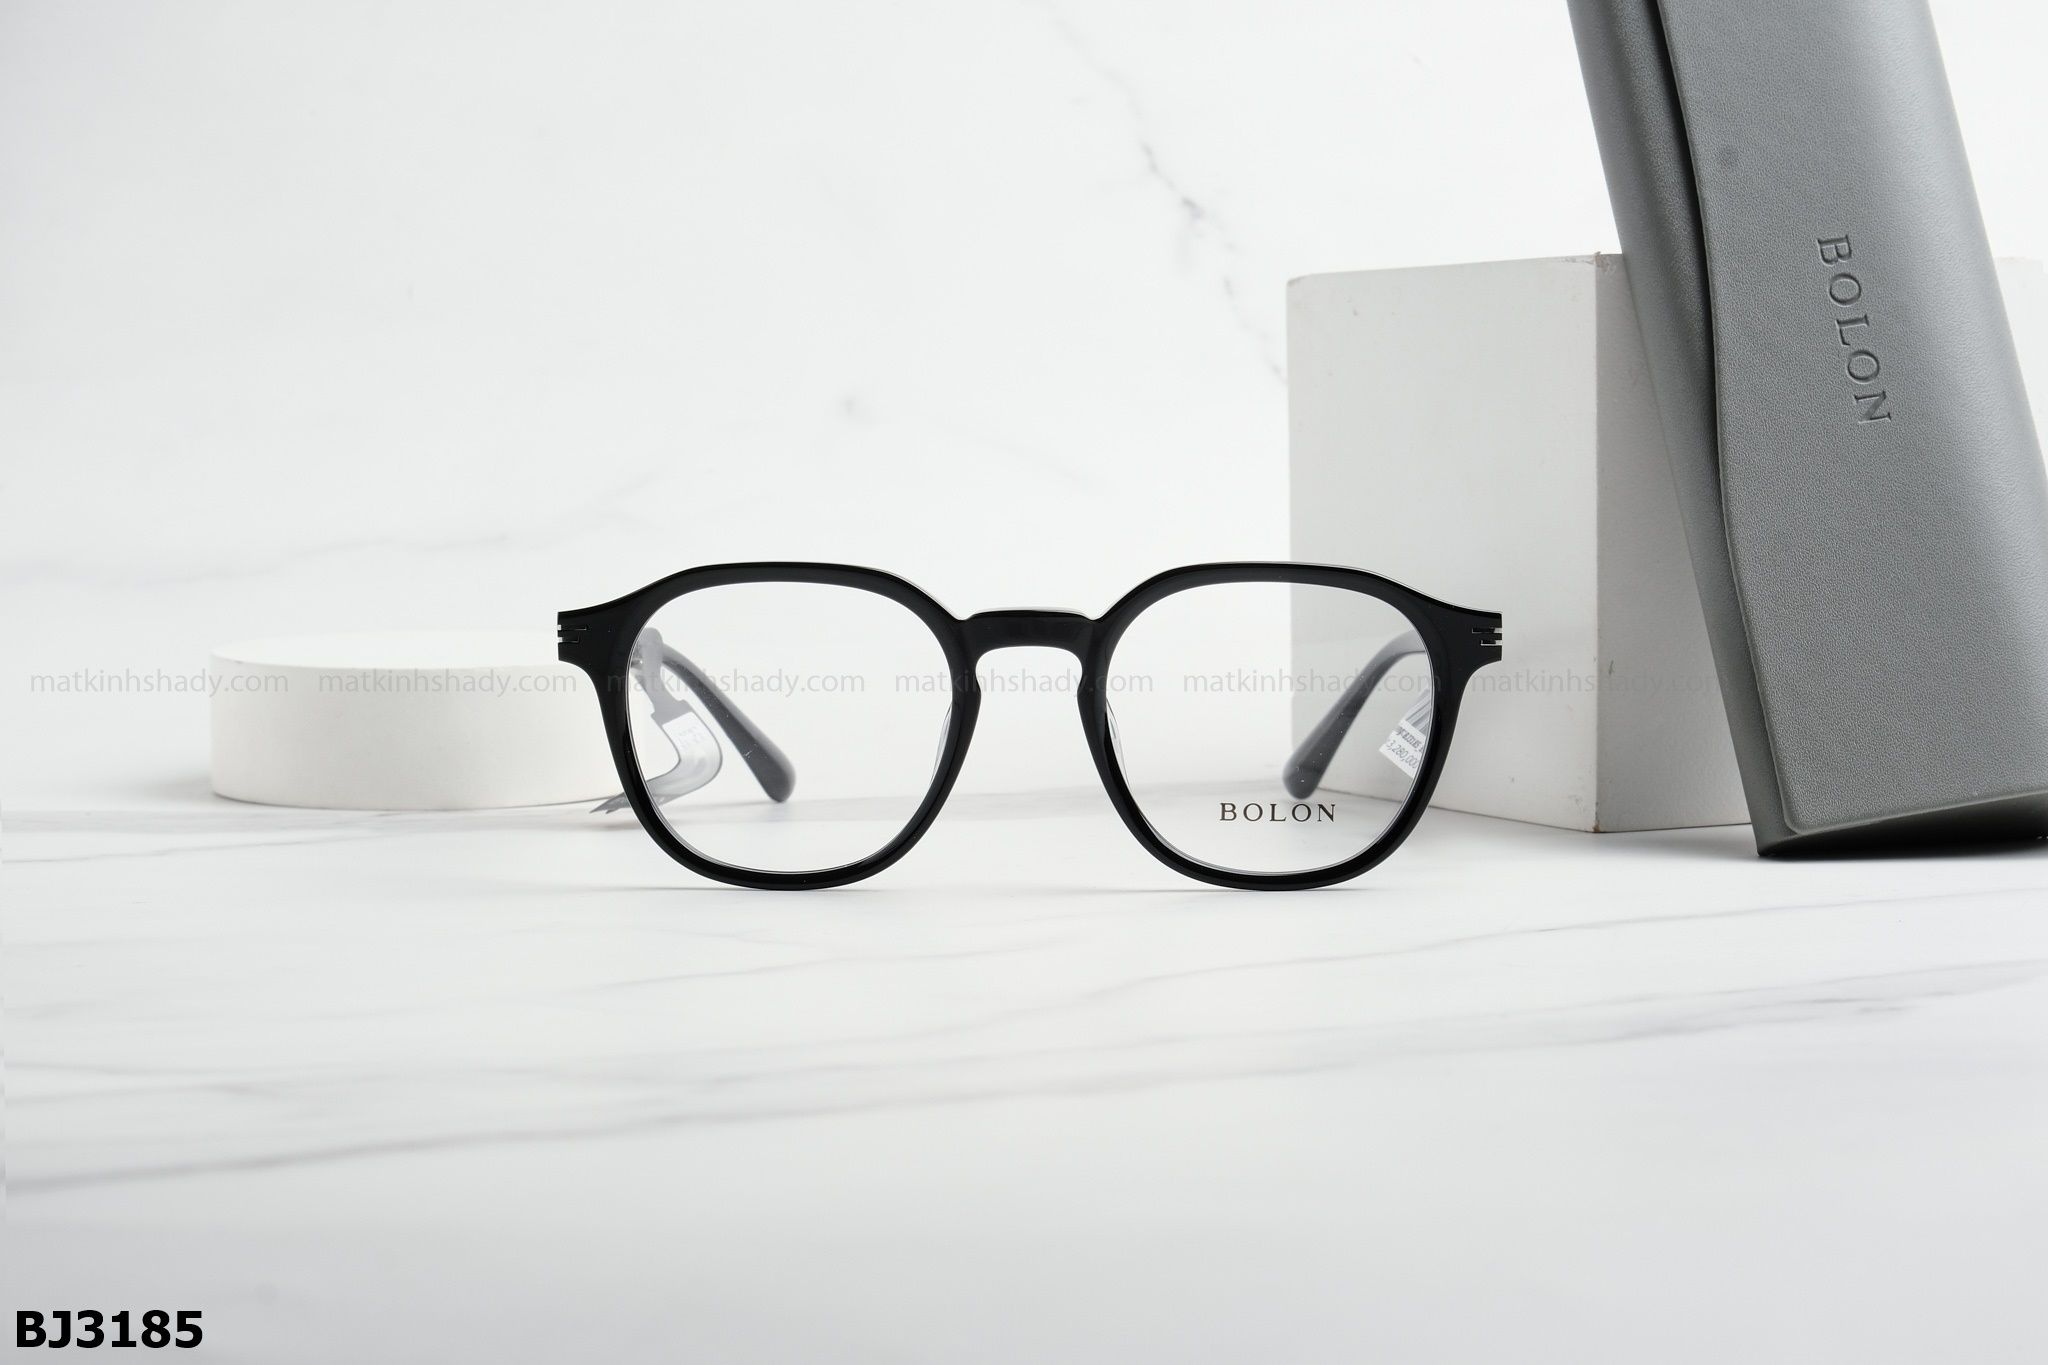  Bolon Eyewear - Glasses - BJ3185 